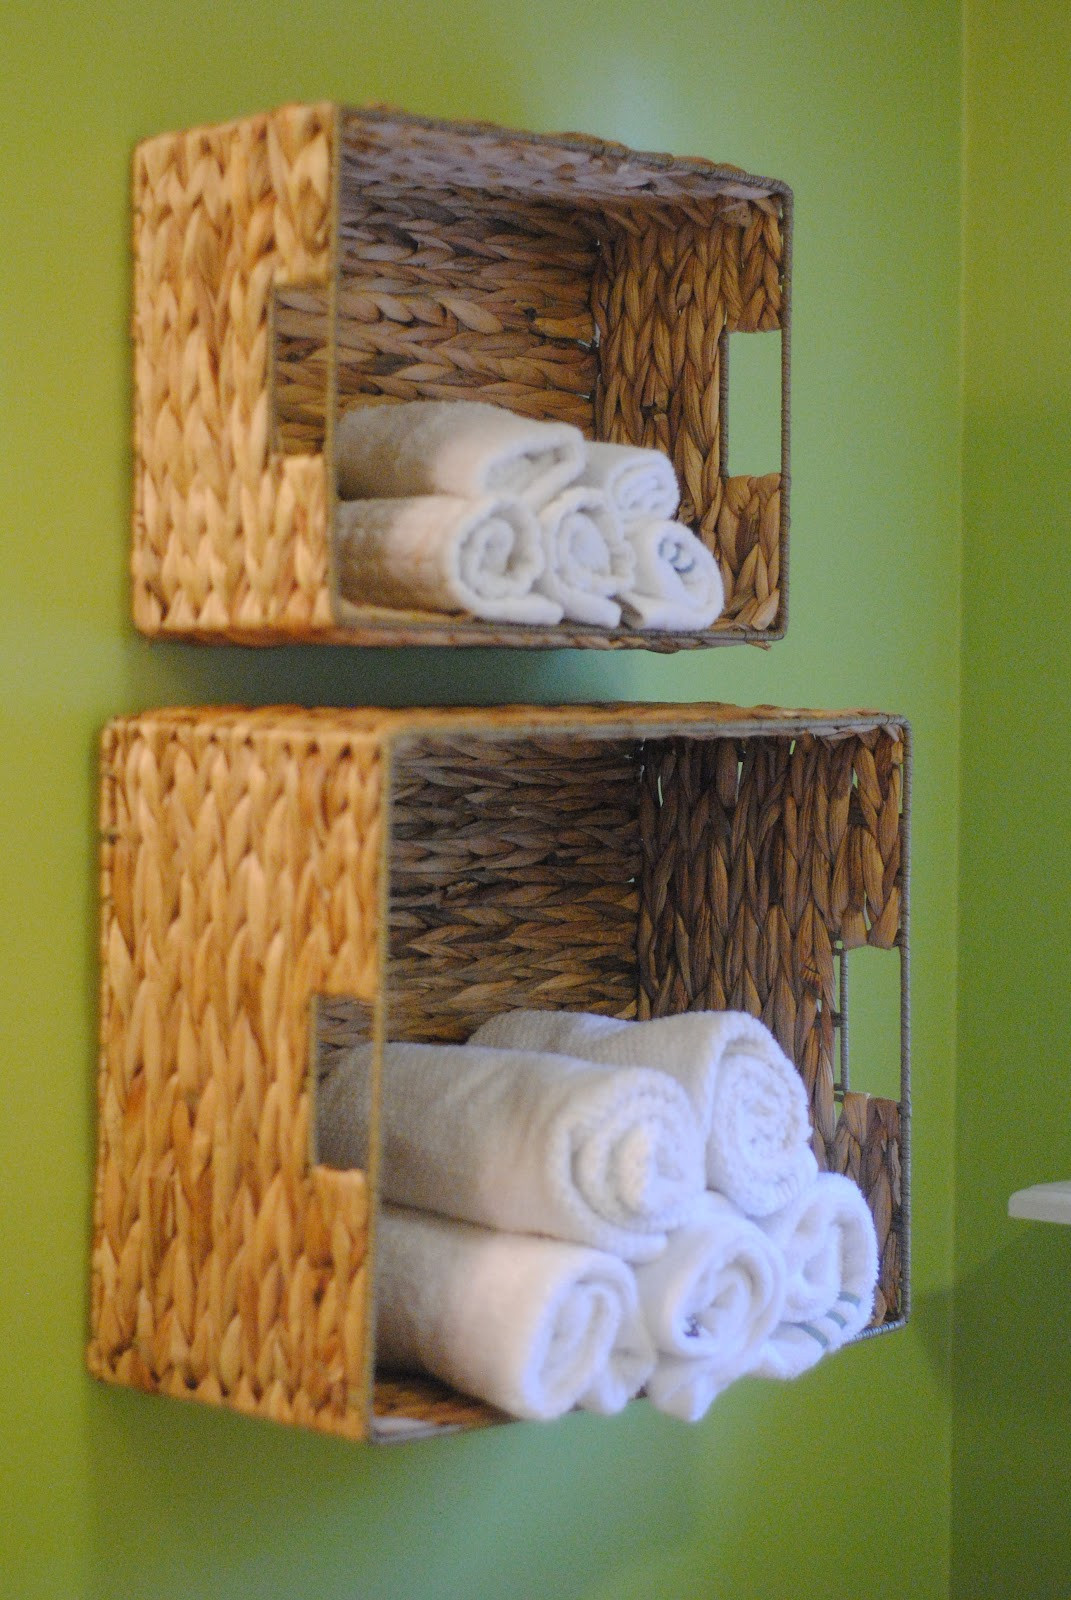 Best ideas about DIY Towel Storage
. Save or Pin DIY Bathroom Towel Storage in Under 5 Minutes Now.